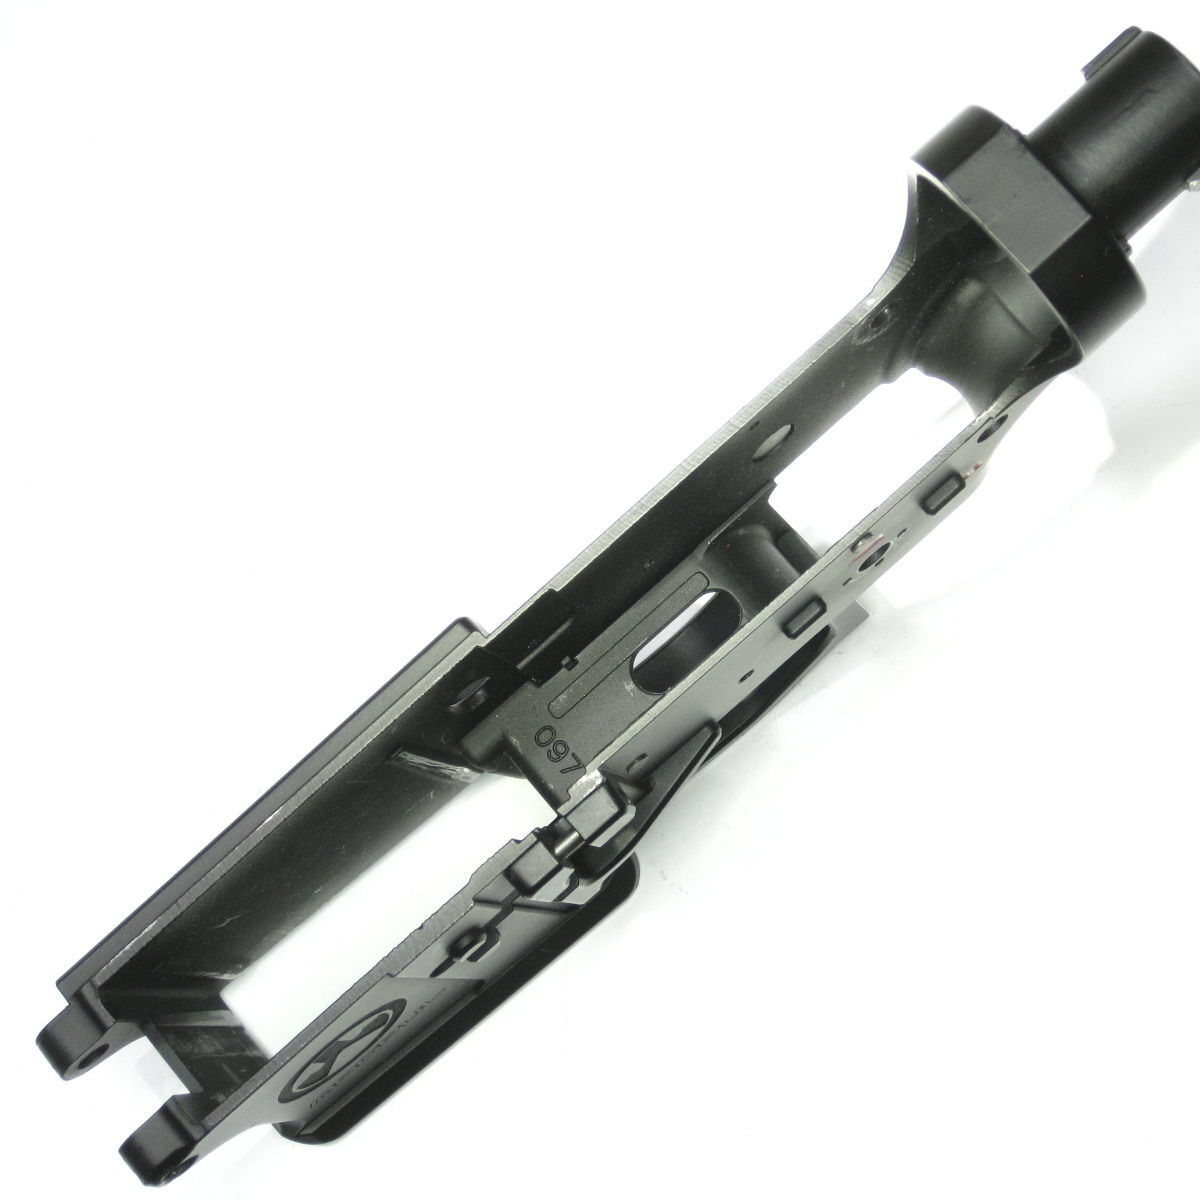 CYMA PLATINUM M4 M-Style MAGPUL metal frame lower standard electric gun for 